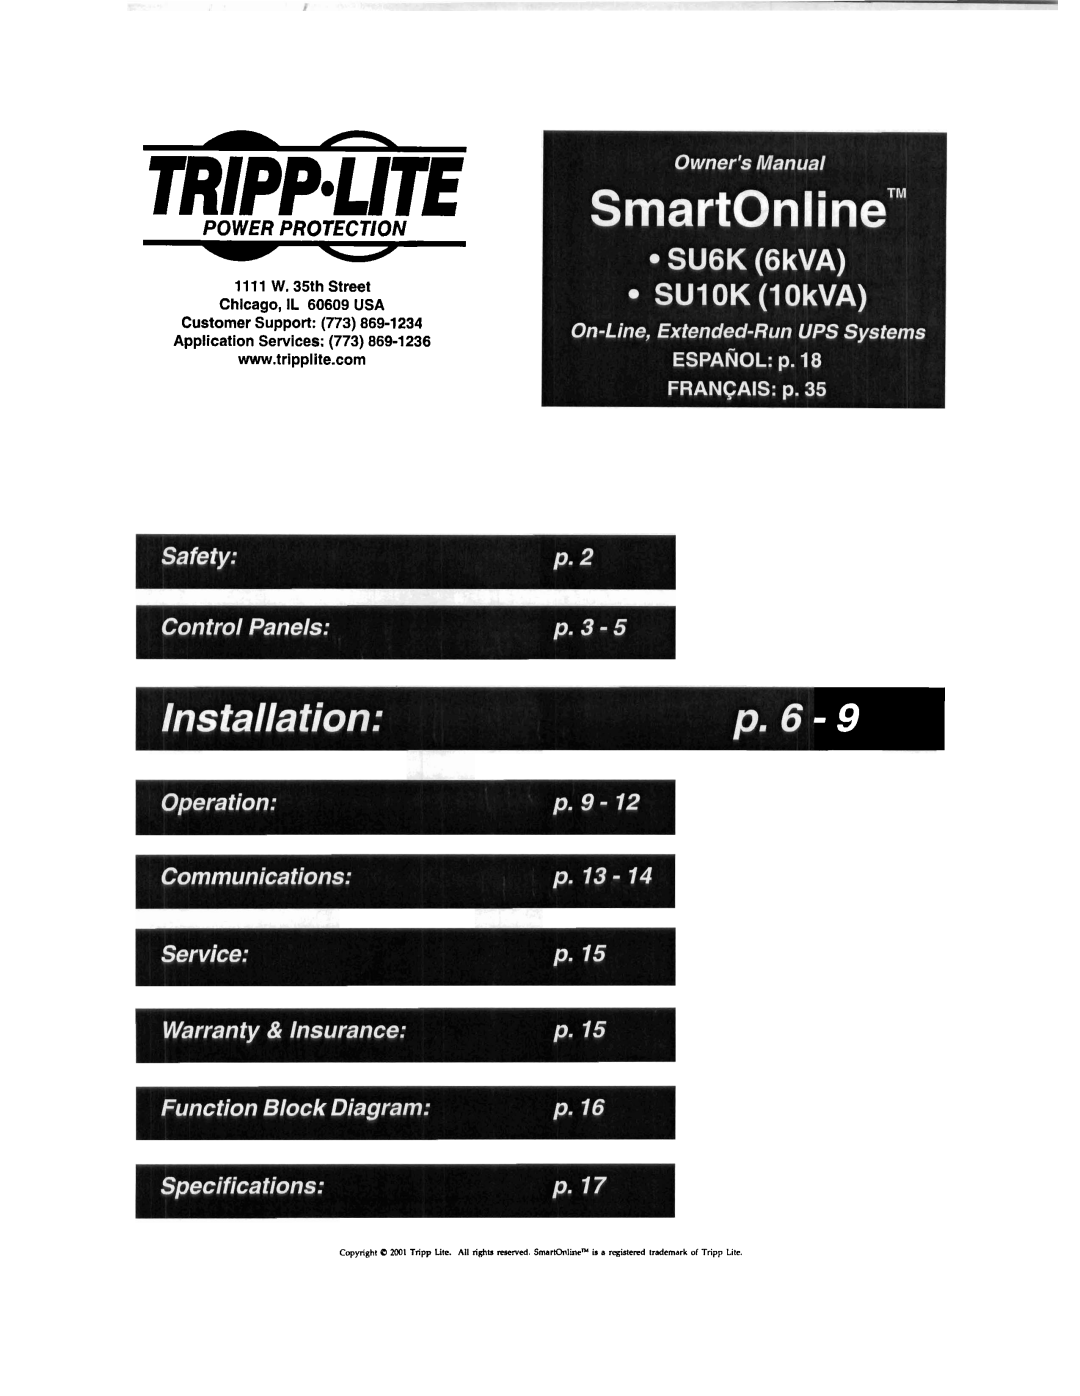 Tripp Lite SU6K, SUIOK manual TRIPPaUTEPOWER PRorEcTloN, 1111 W. 35th Street Chlcago, IL 60609 USA Customer Support 773 